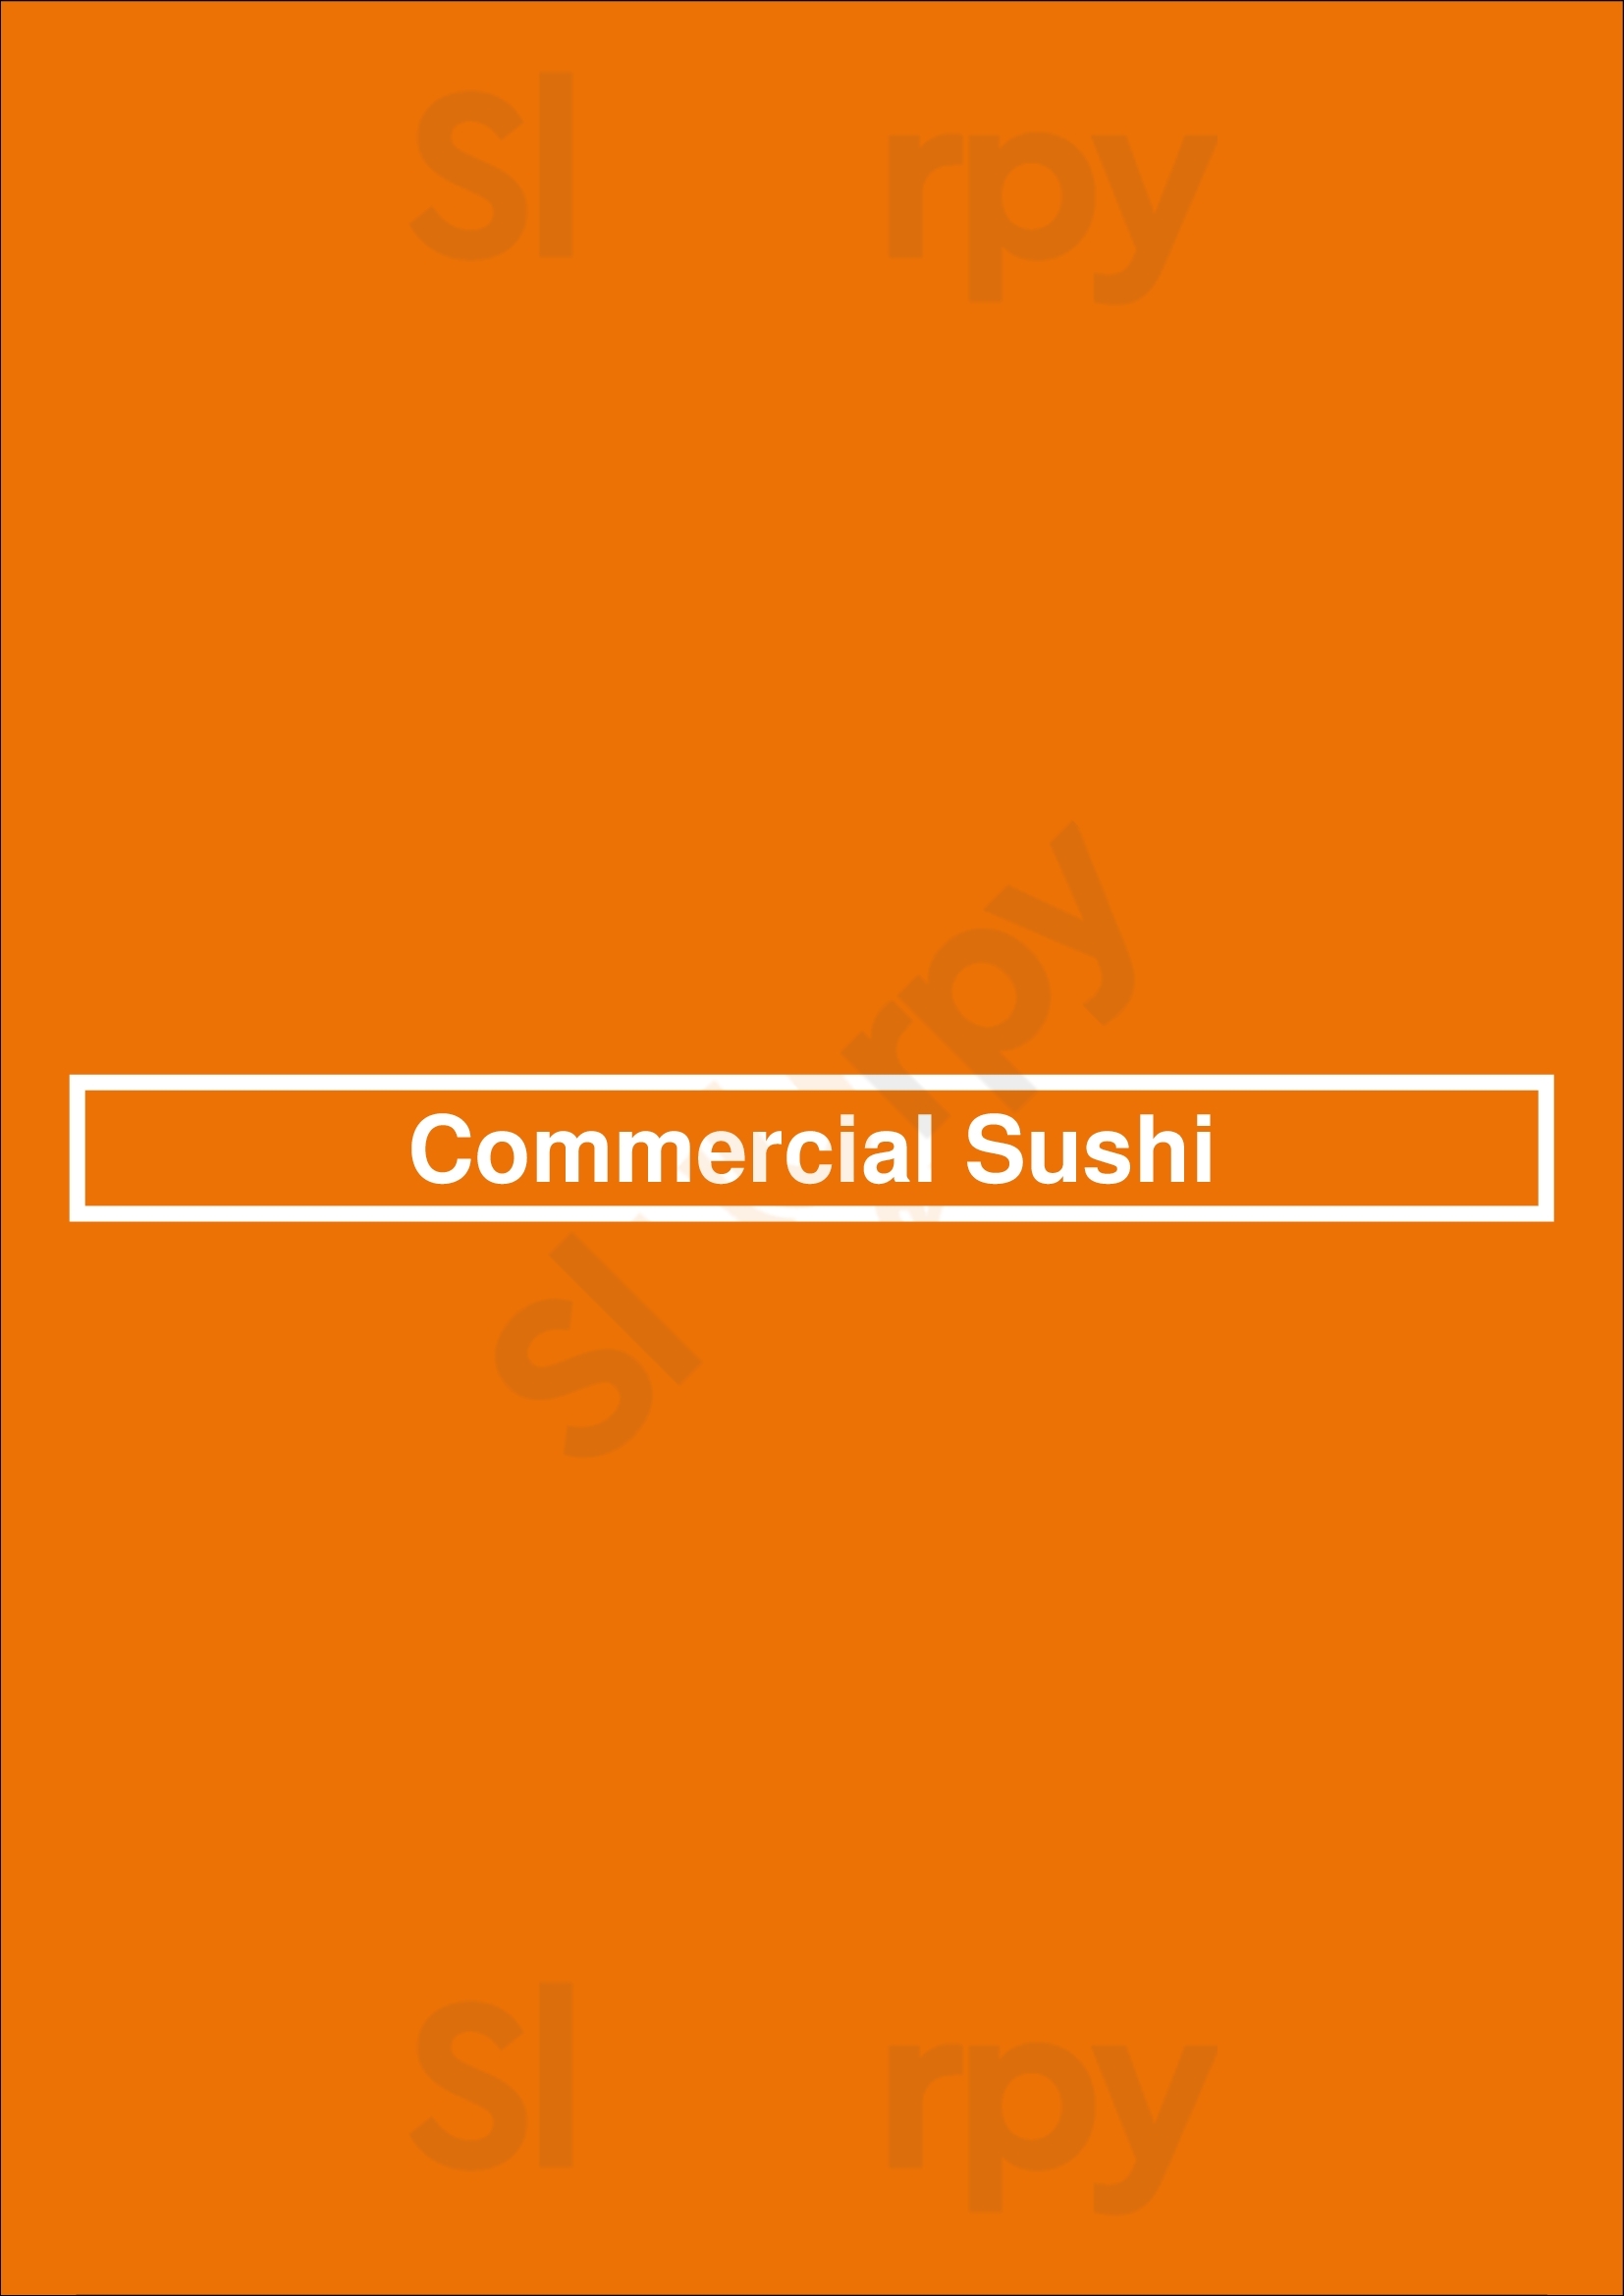 Commercial Sushi Vancouver Menu - 1